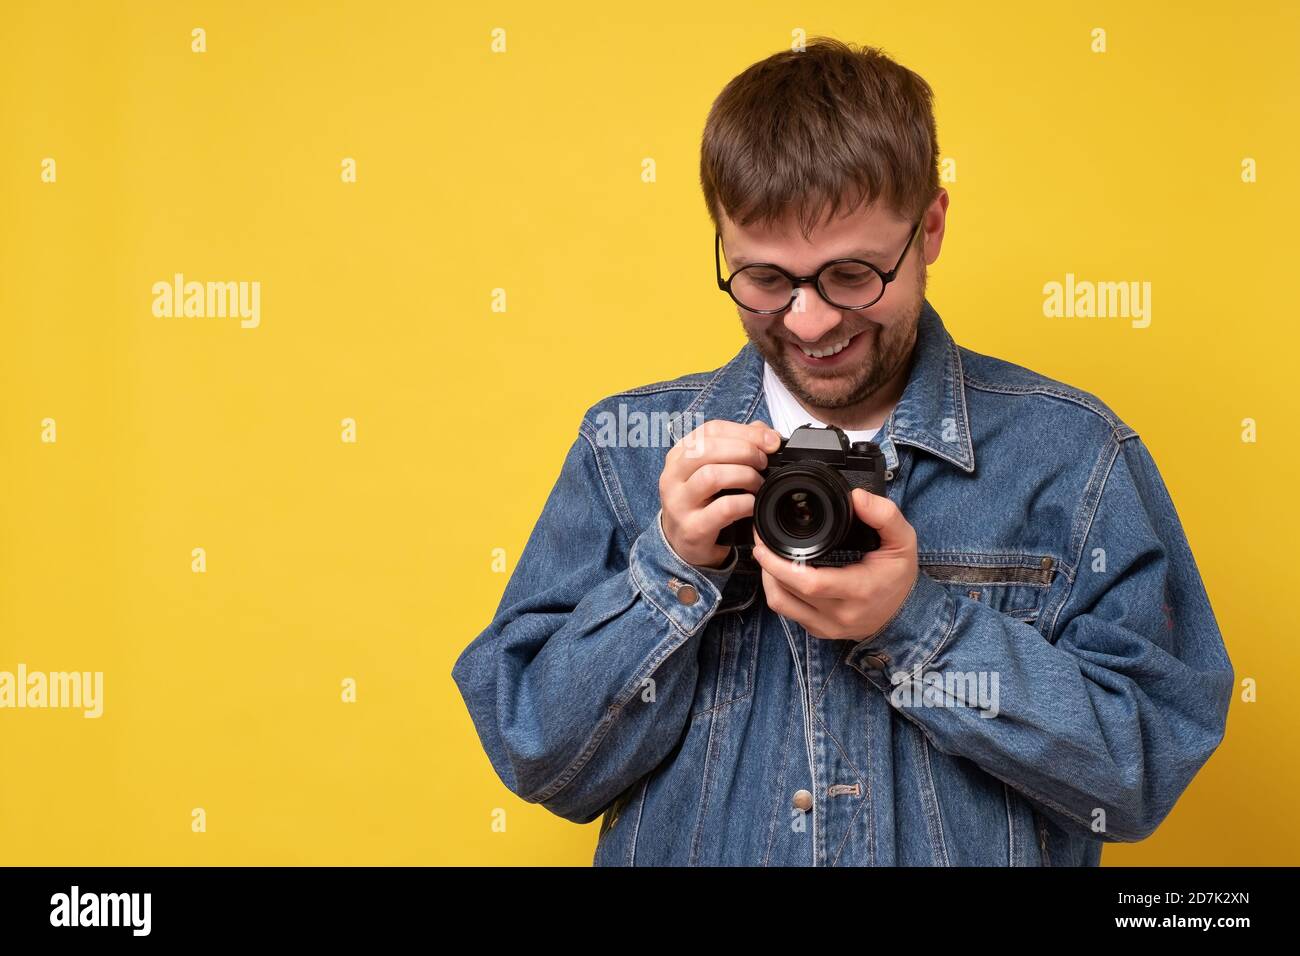 kaukasischer junger Mann hält Fotokamera nehmen Fotostudie, um Fotos zu machen. Stockfoto